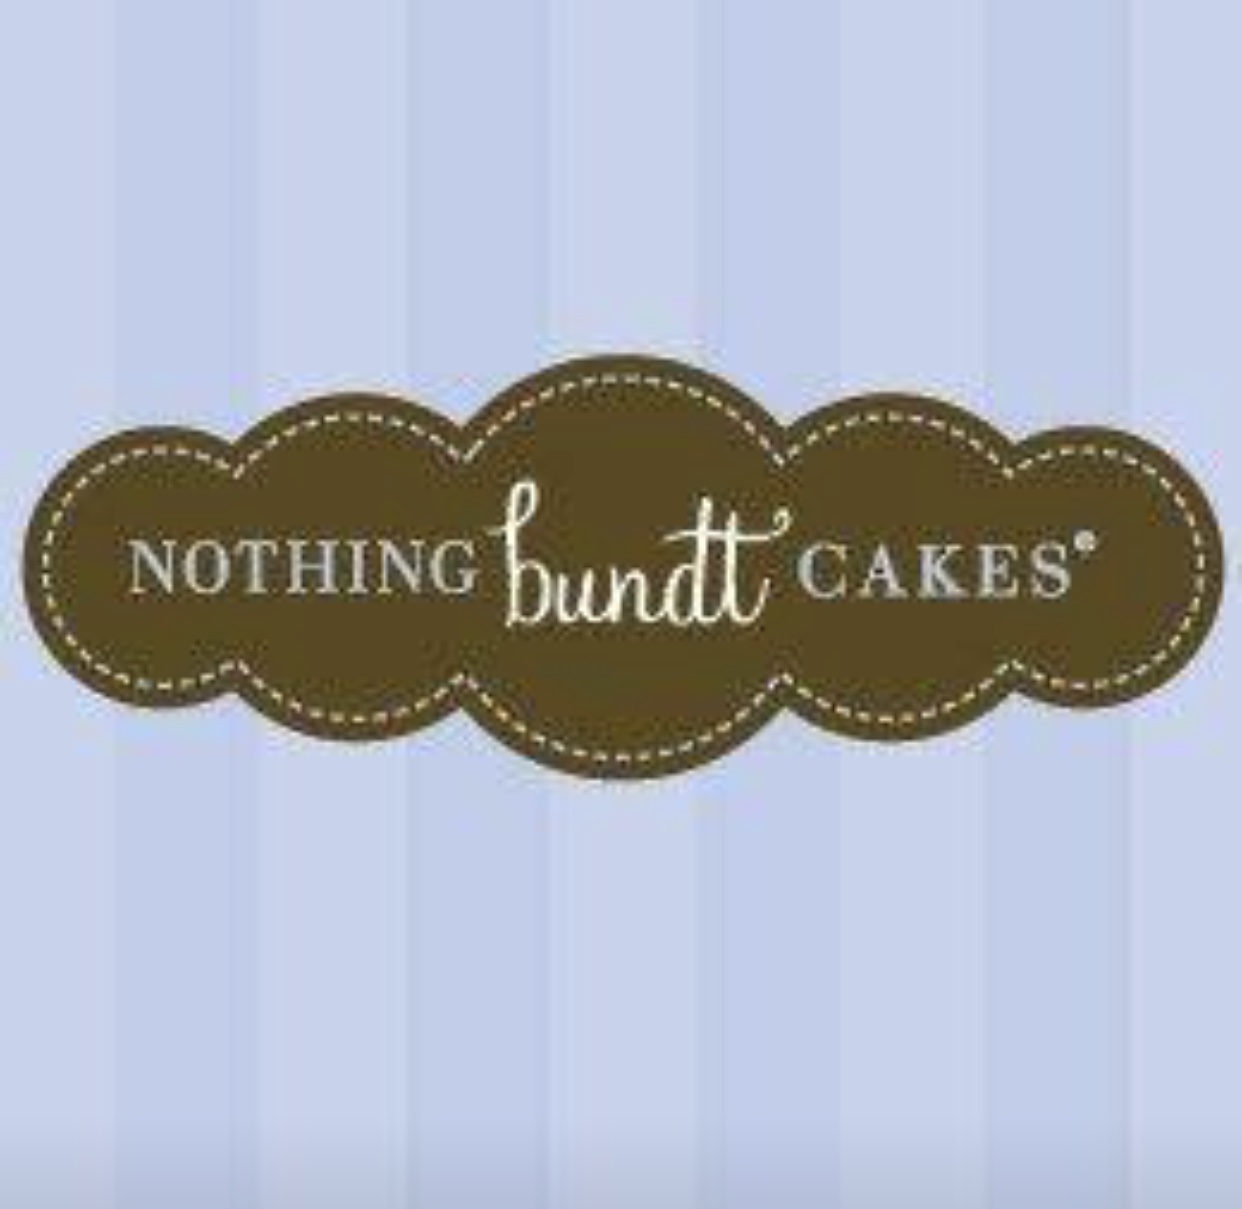 Sponsor Nothing Bundt Cakes